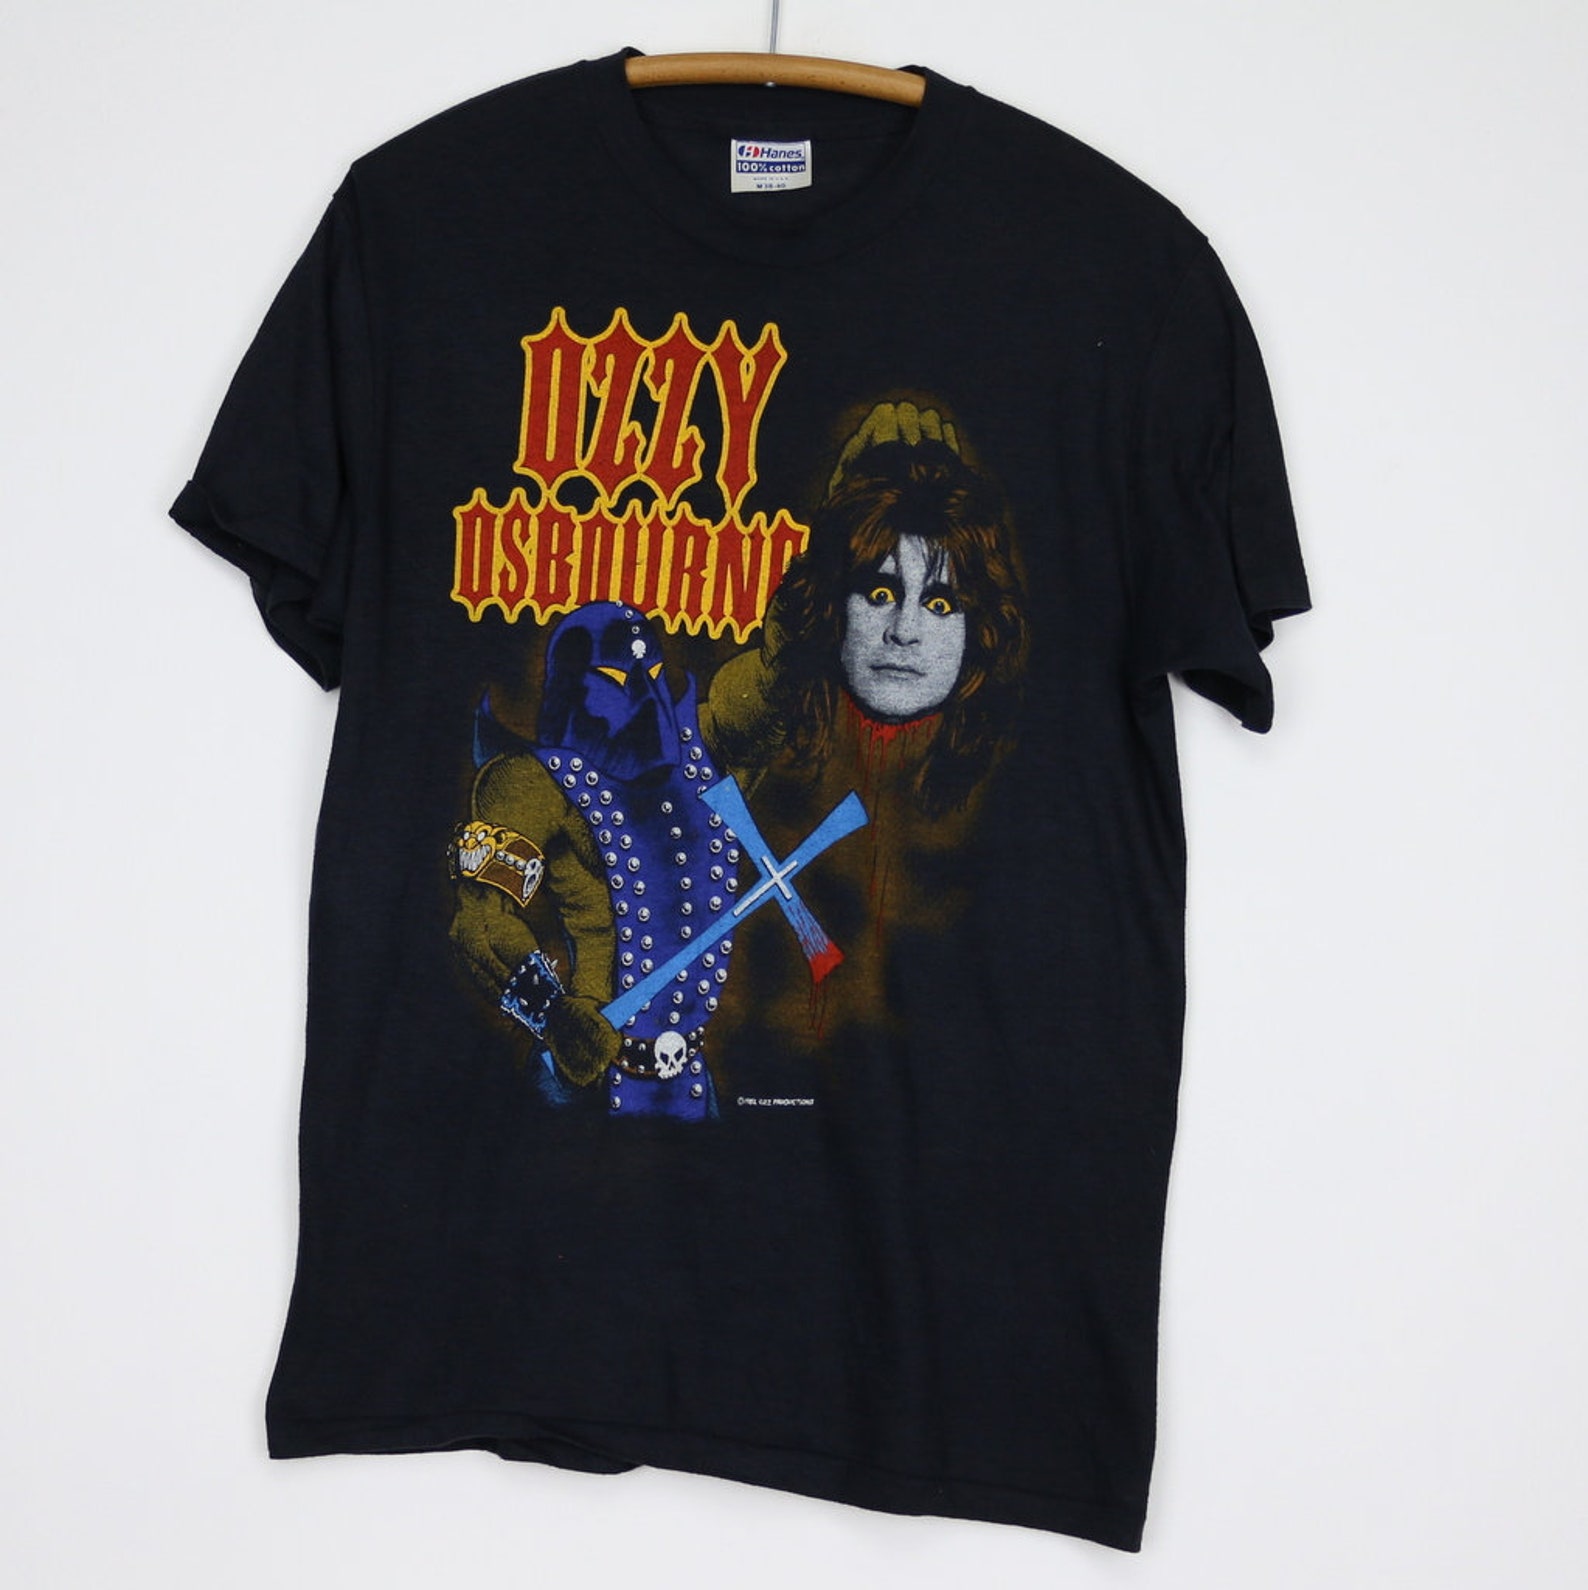 Ozzy Osbourne Shirt Vintage tshirt 1982 Diary of a Madman Tour | Etsy